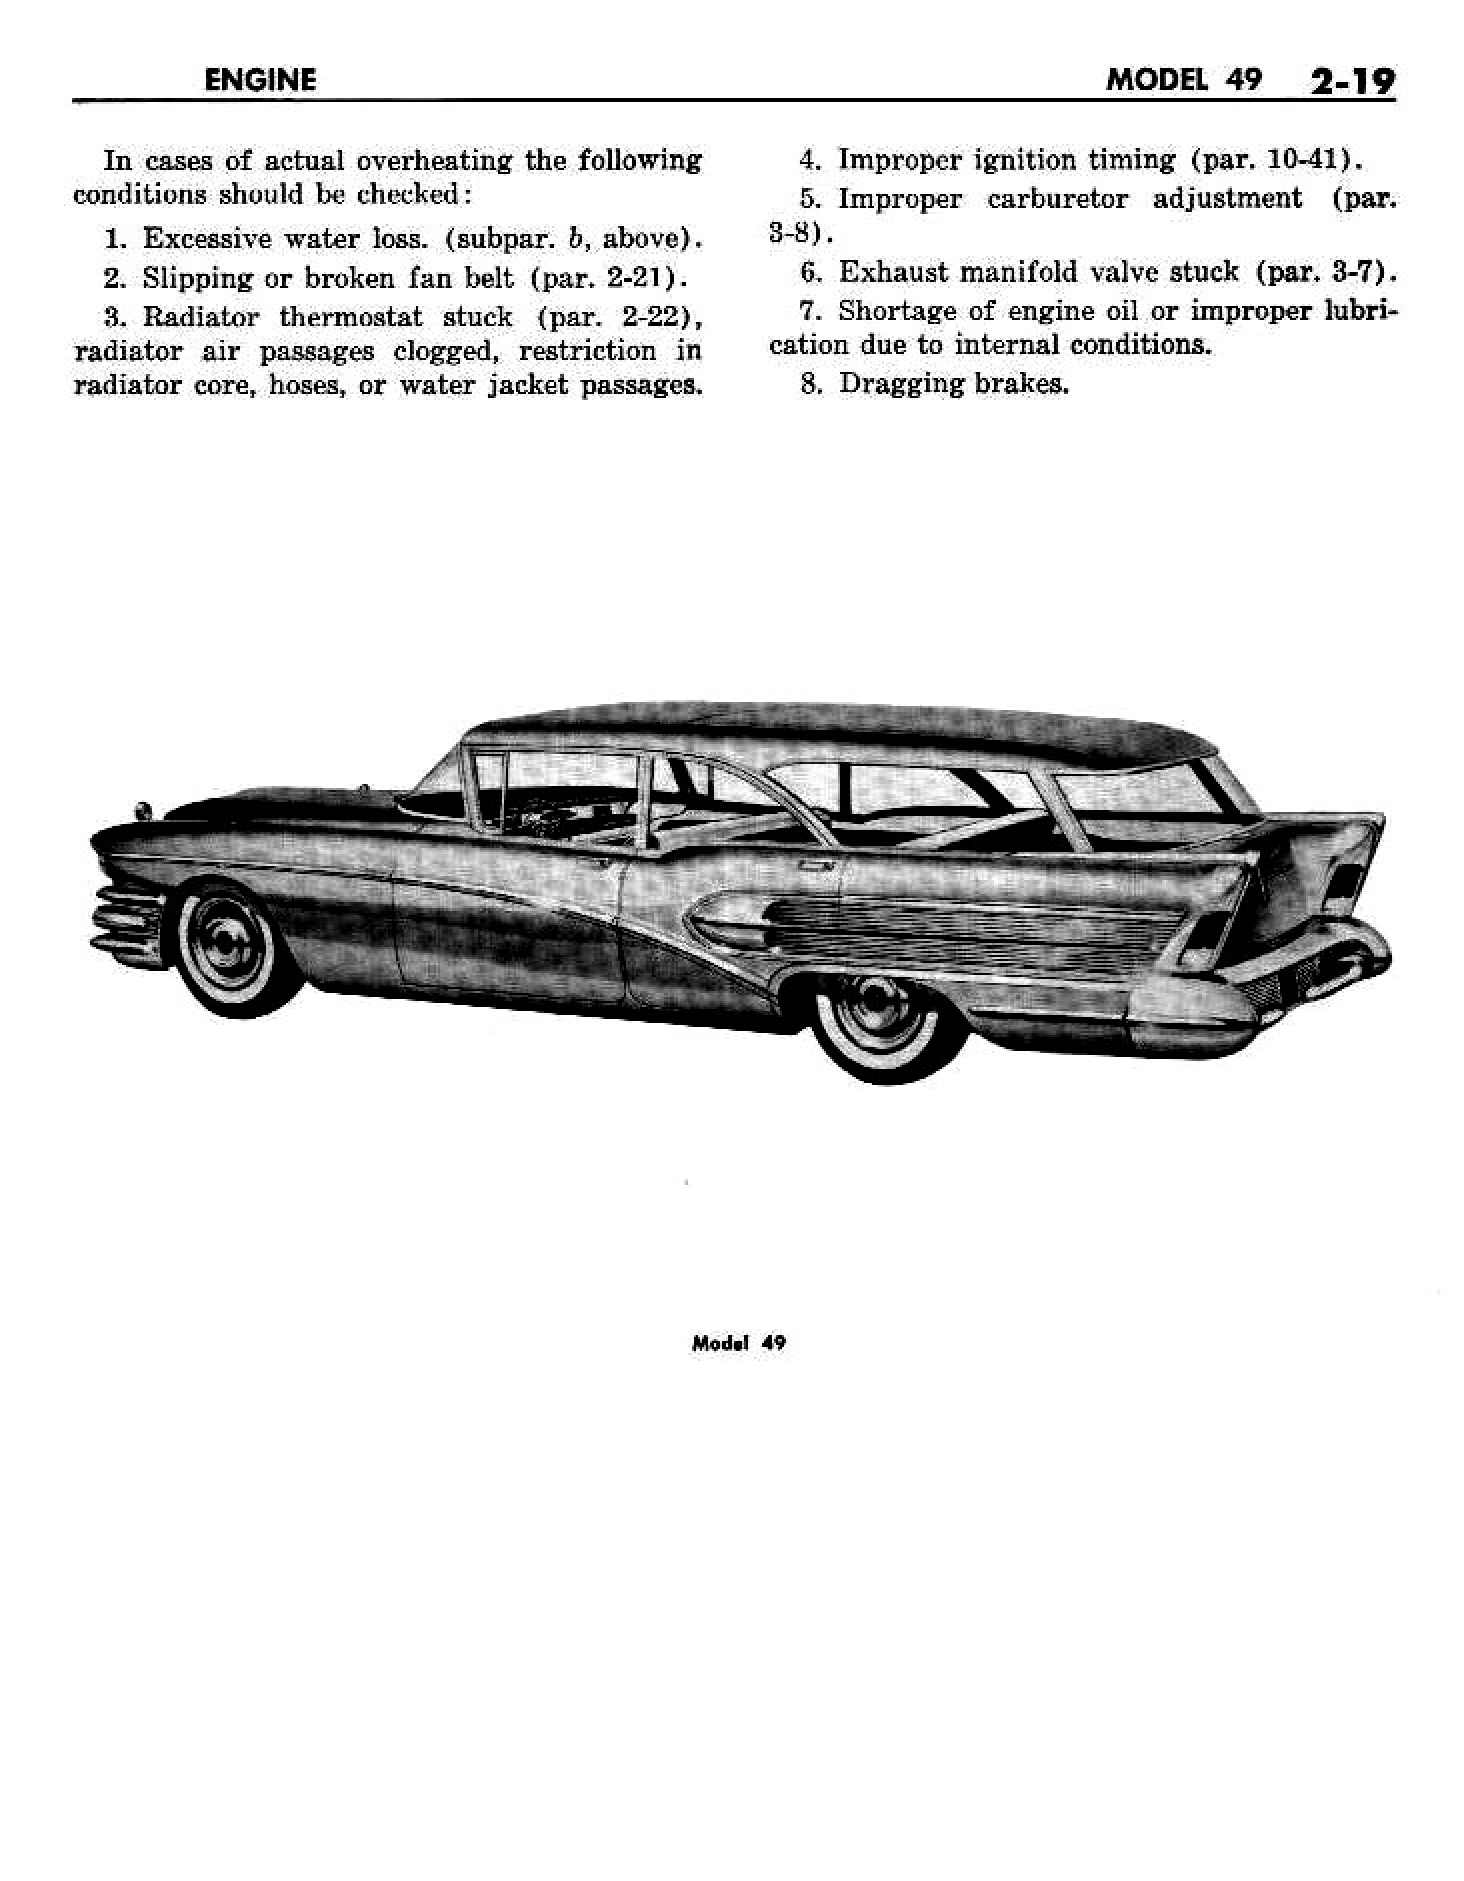 n_03 1958 Buick Shop Manual - Engine_19.jpg